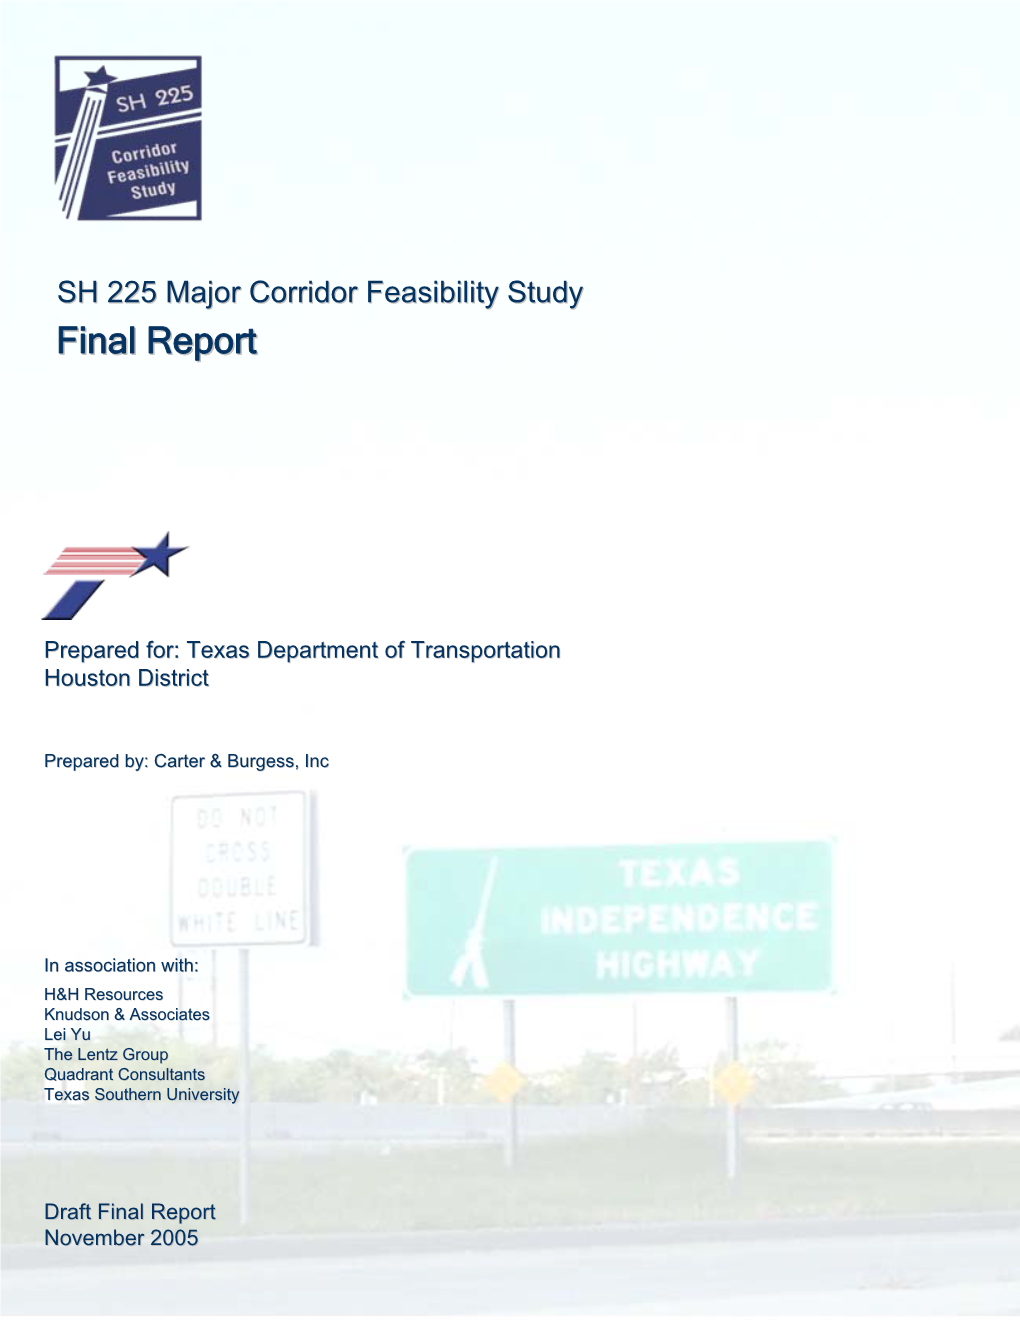 SH 225 Corridor Feasibility Study